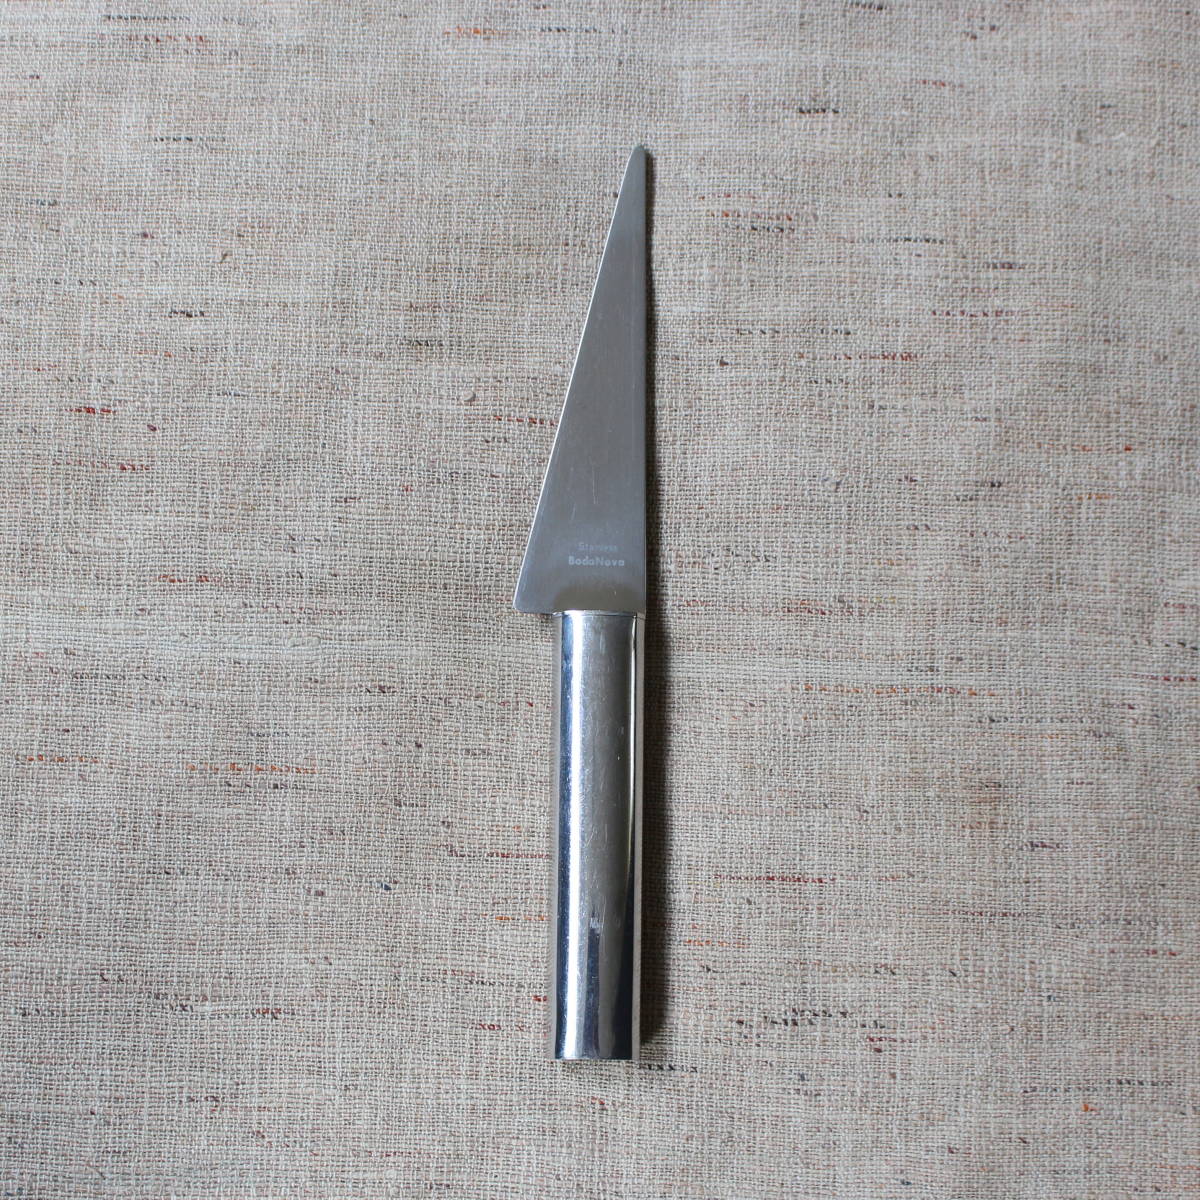 1970-80s редкость Boda Nova Oval Cheese Knife MOMA долгосрочный . магазин товар bow house Dieter Rams Vintage peli усилитель -ve сыр нож Северная Европа 